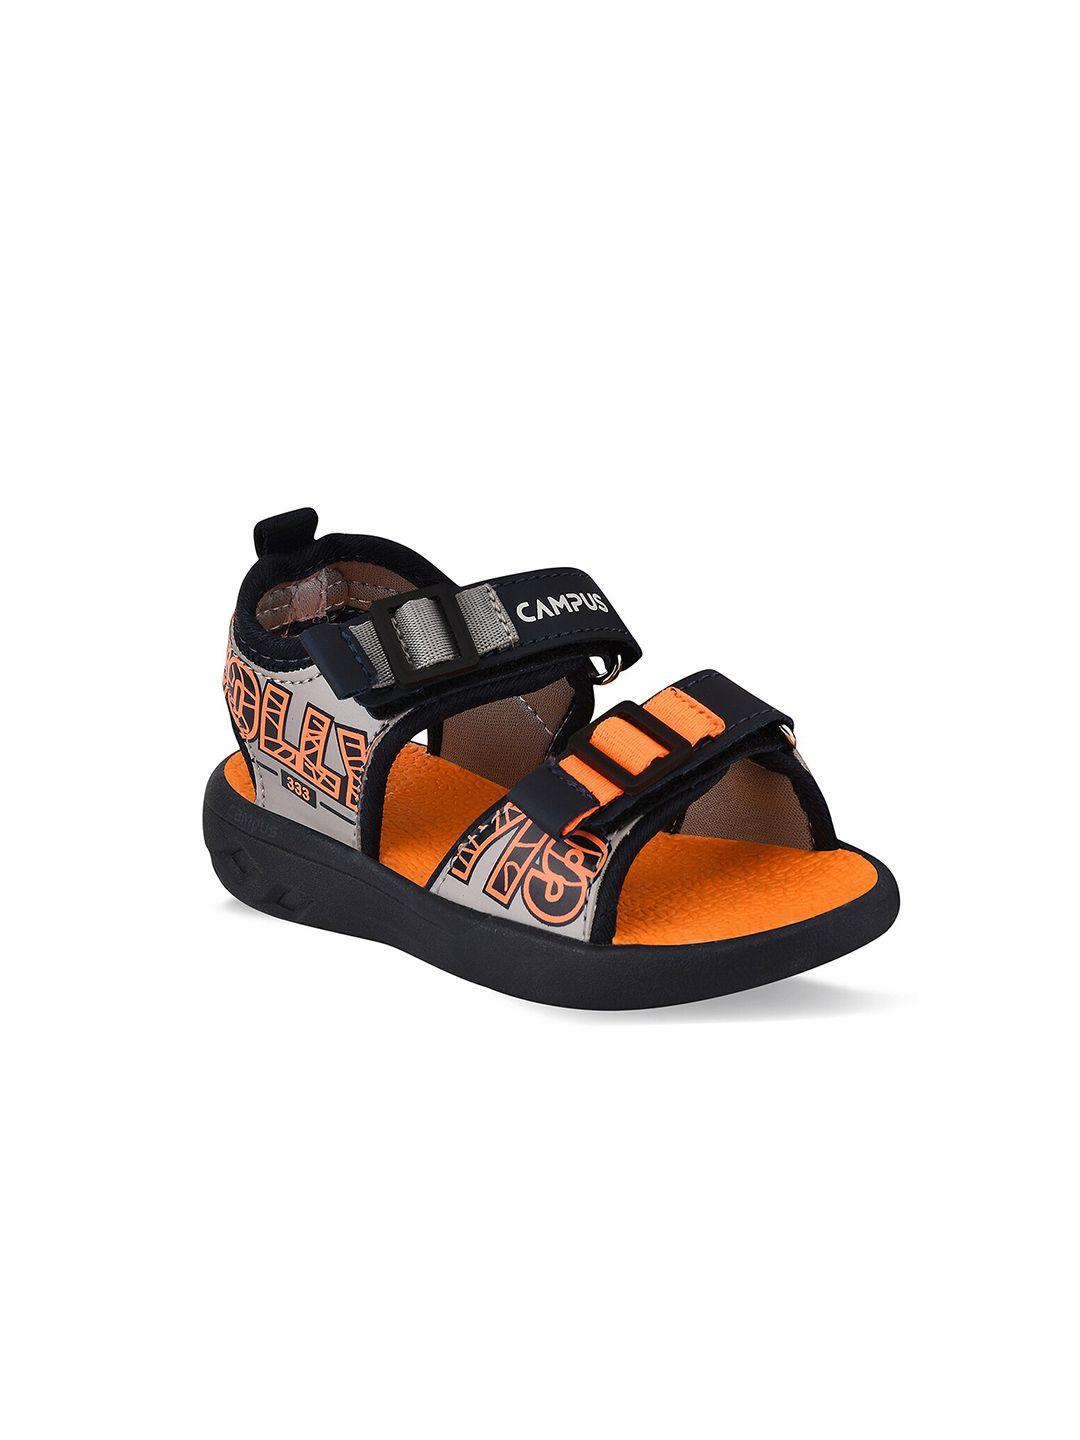 campus kids grey & orange printed sports sandals